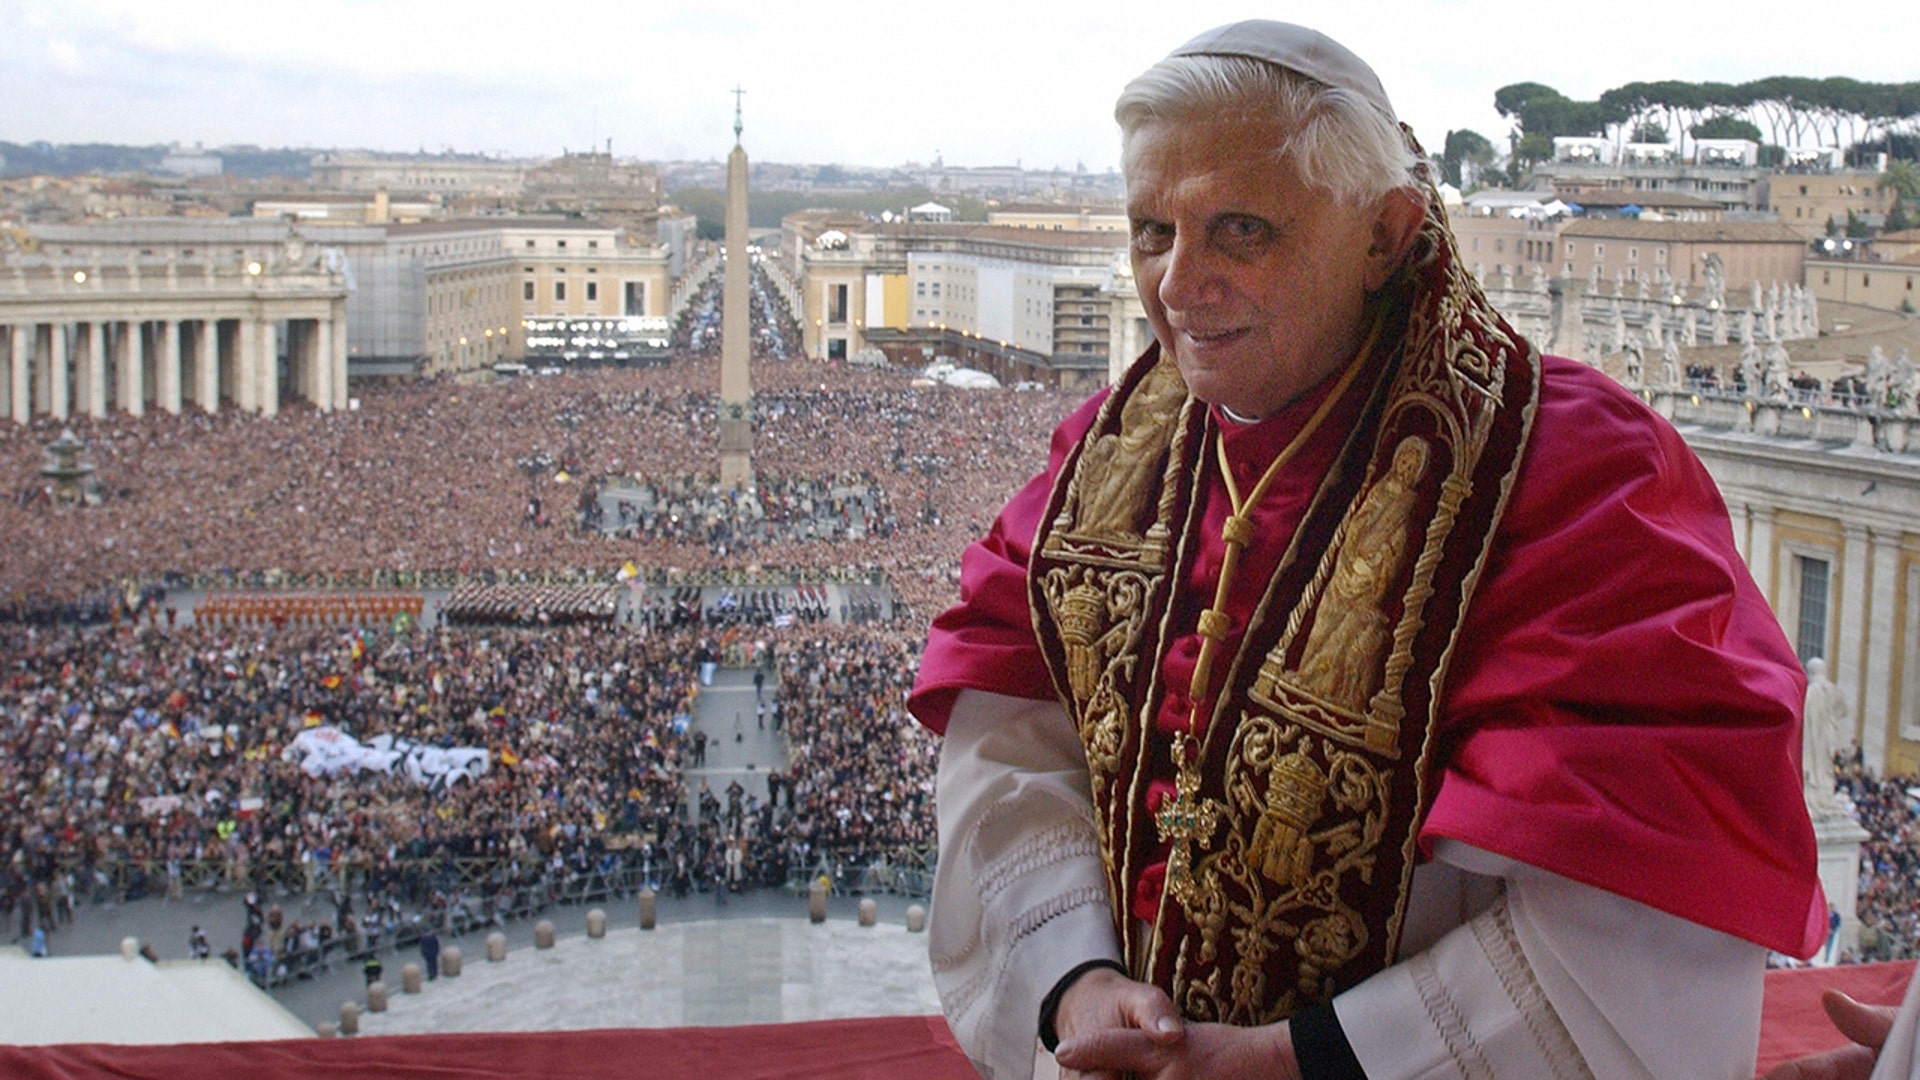 Photo Gallery: The life of Pope Emeritus Benedict XVI, age 95